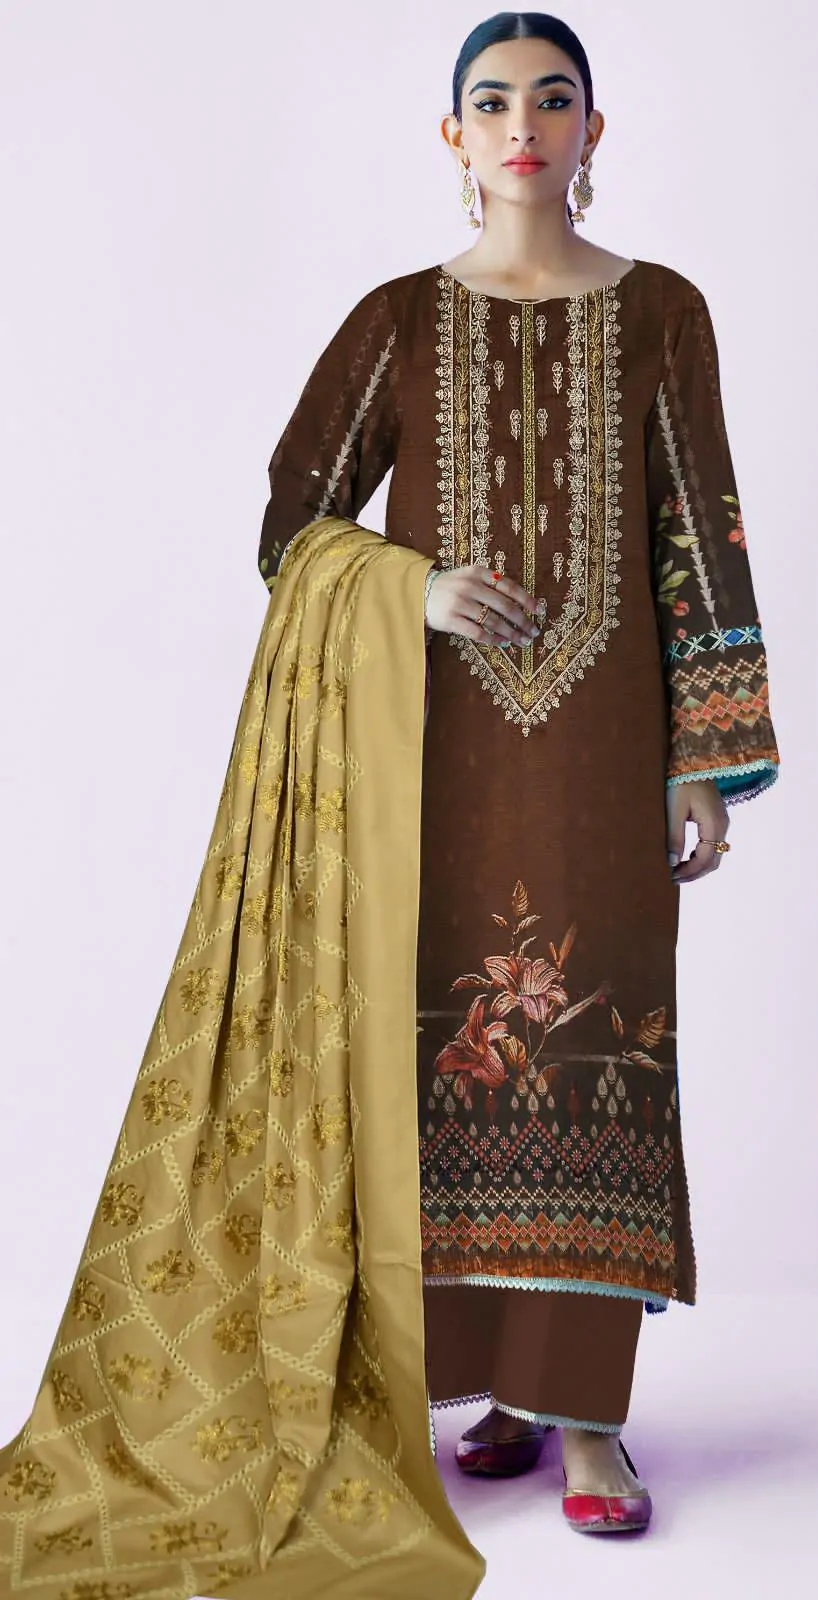 DF-214-E: Bonanza 3Pc Embroidered Dhanak Dress